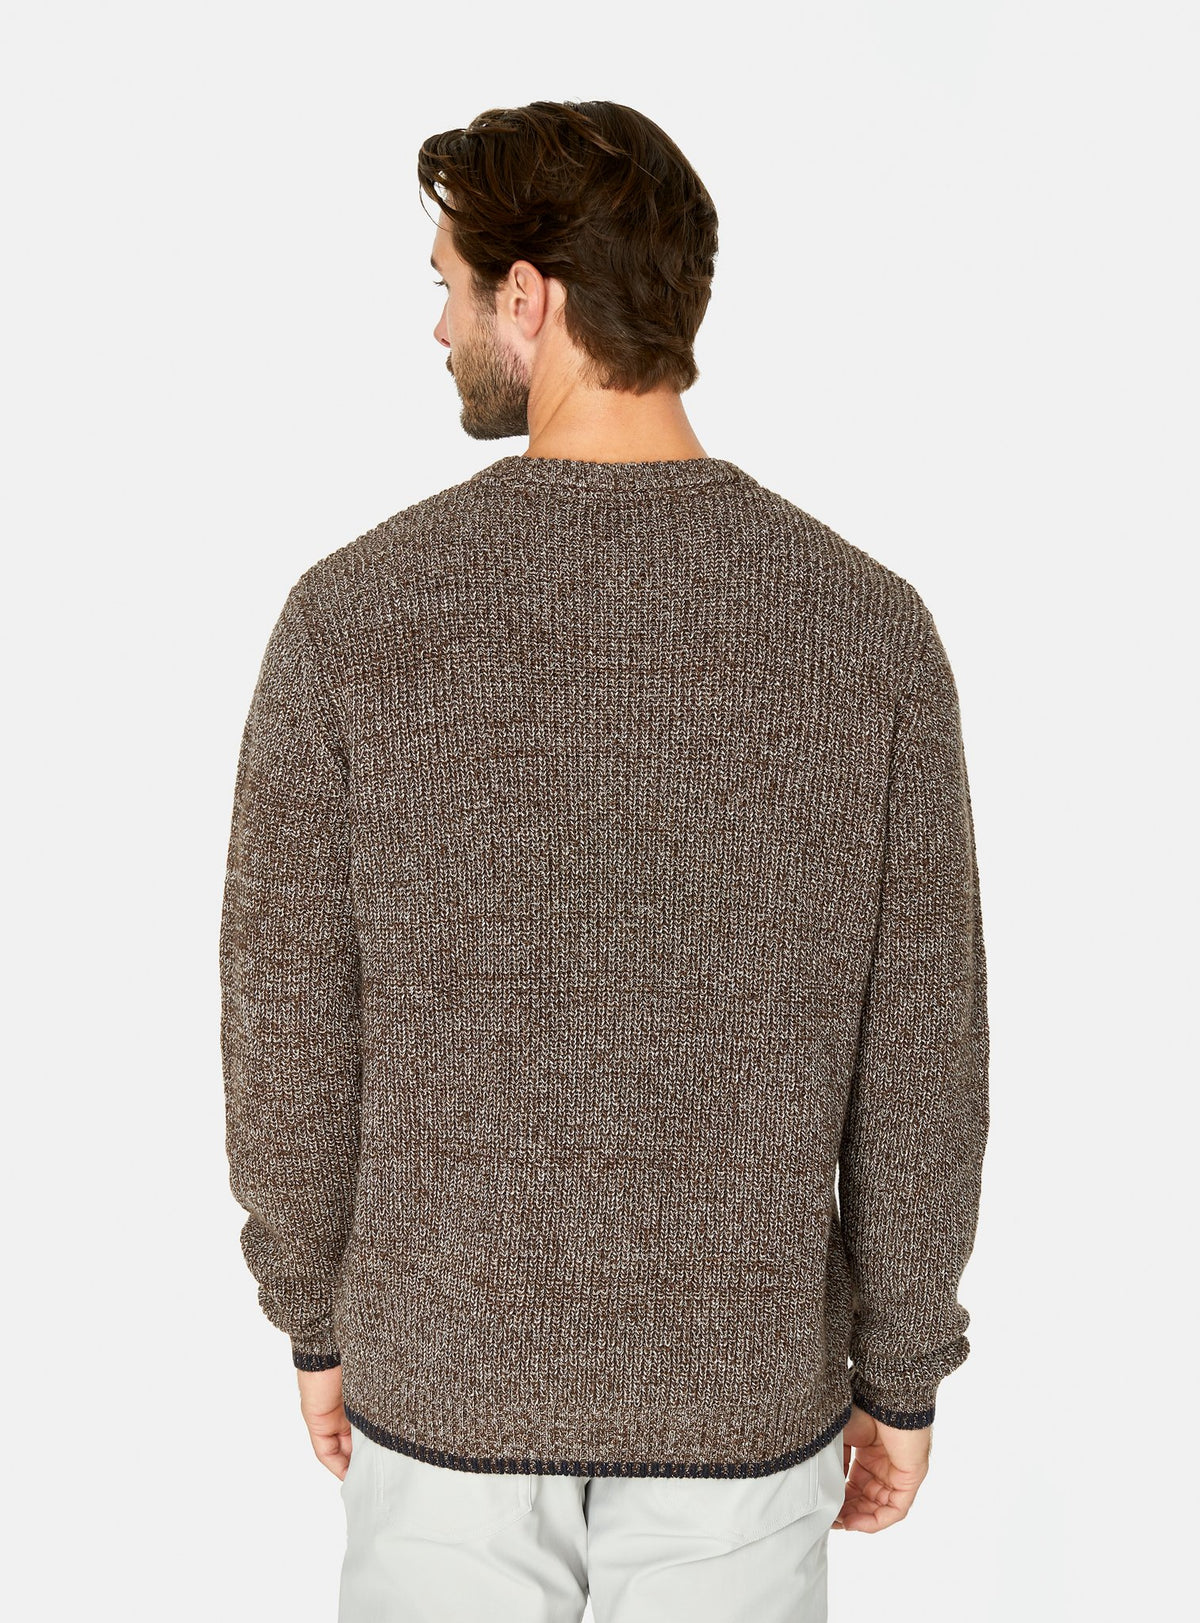 Bohemian Knit Sweater